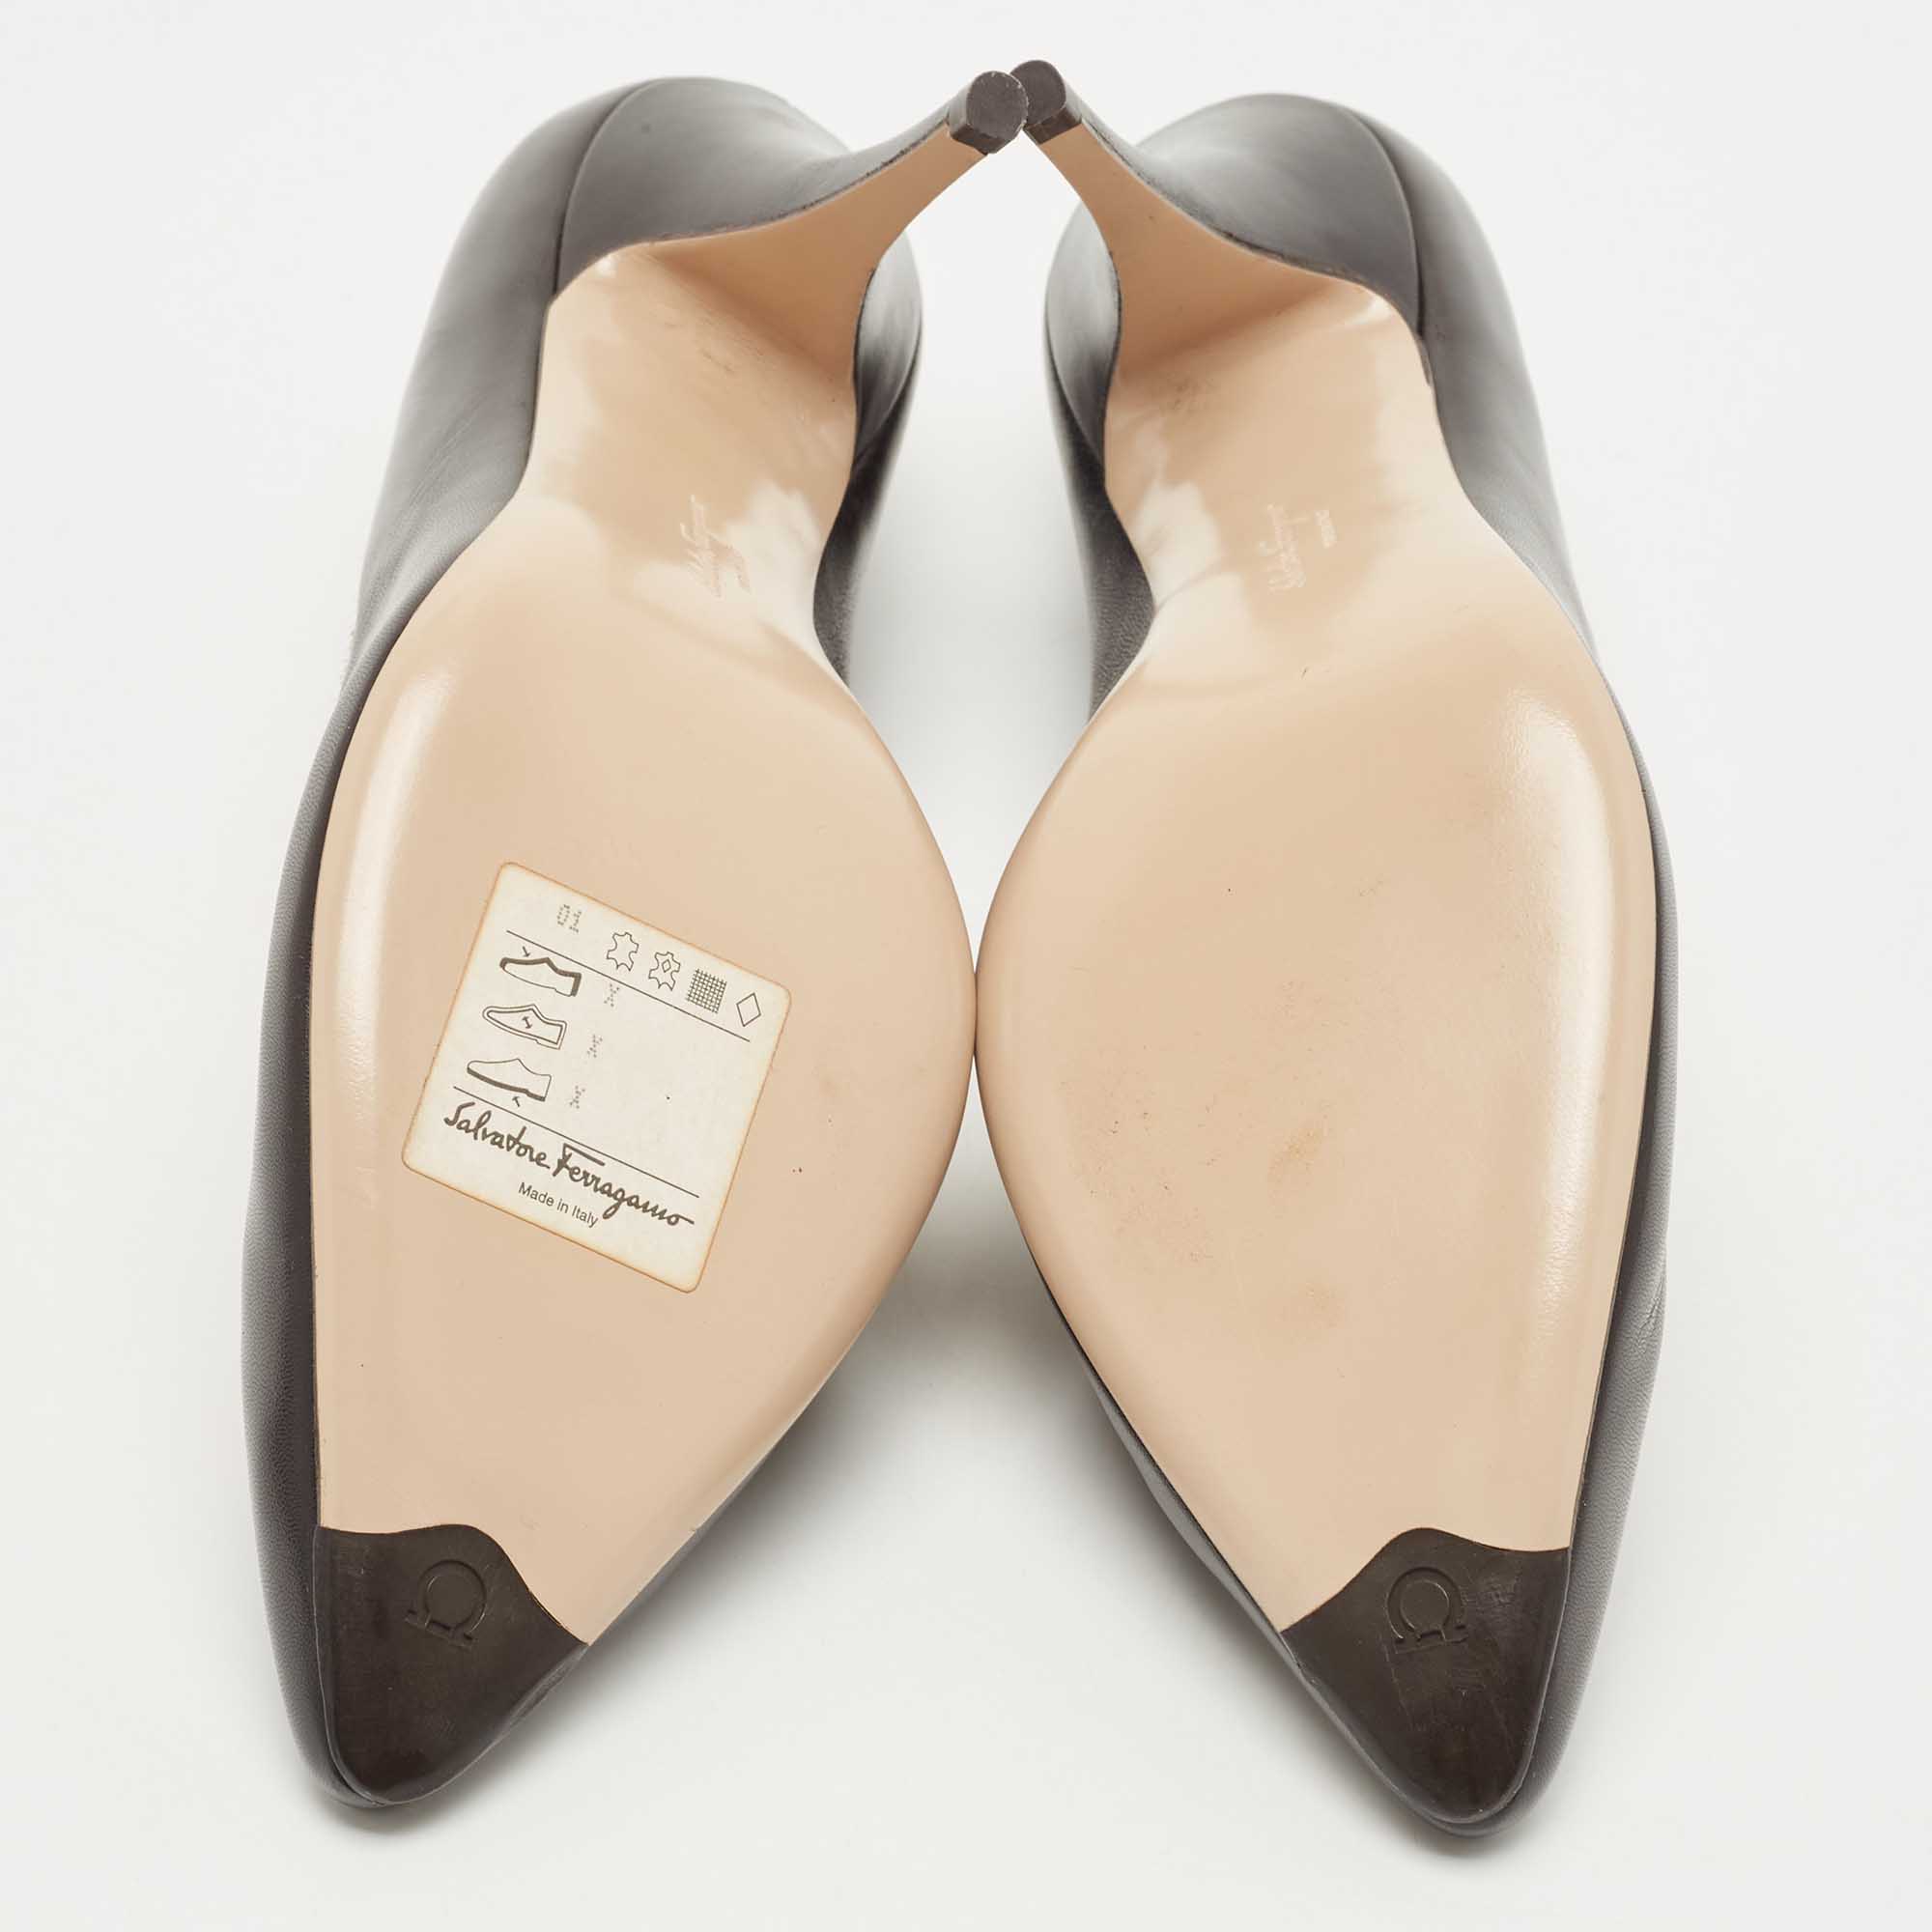 Salvatore Ferragamo Black/Leopard Print Leather Pointed Toe Pumps Size 41